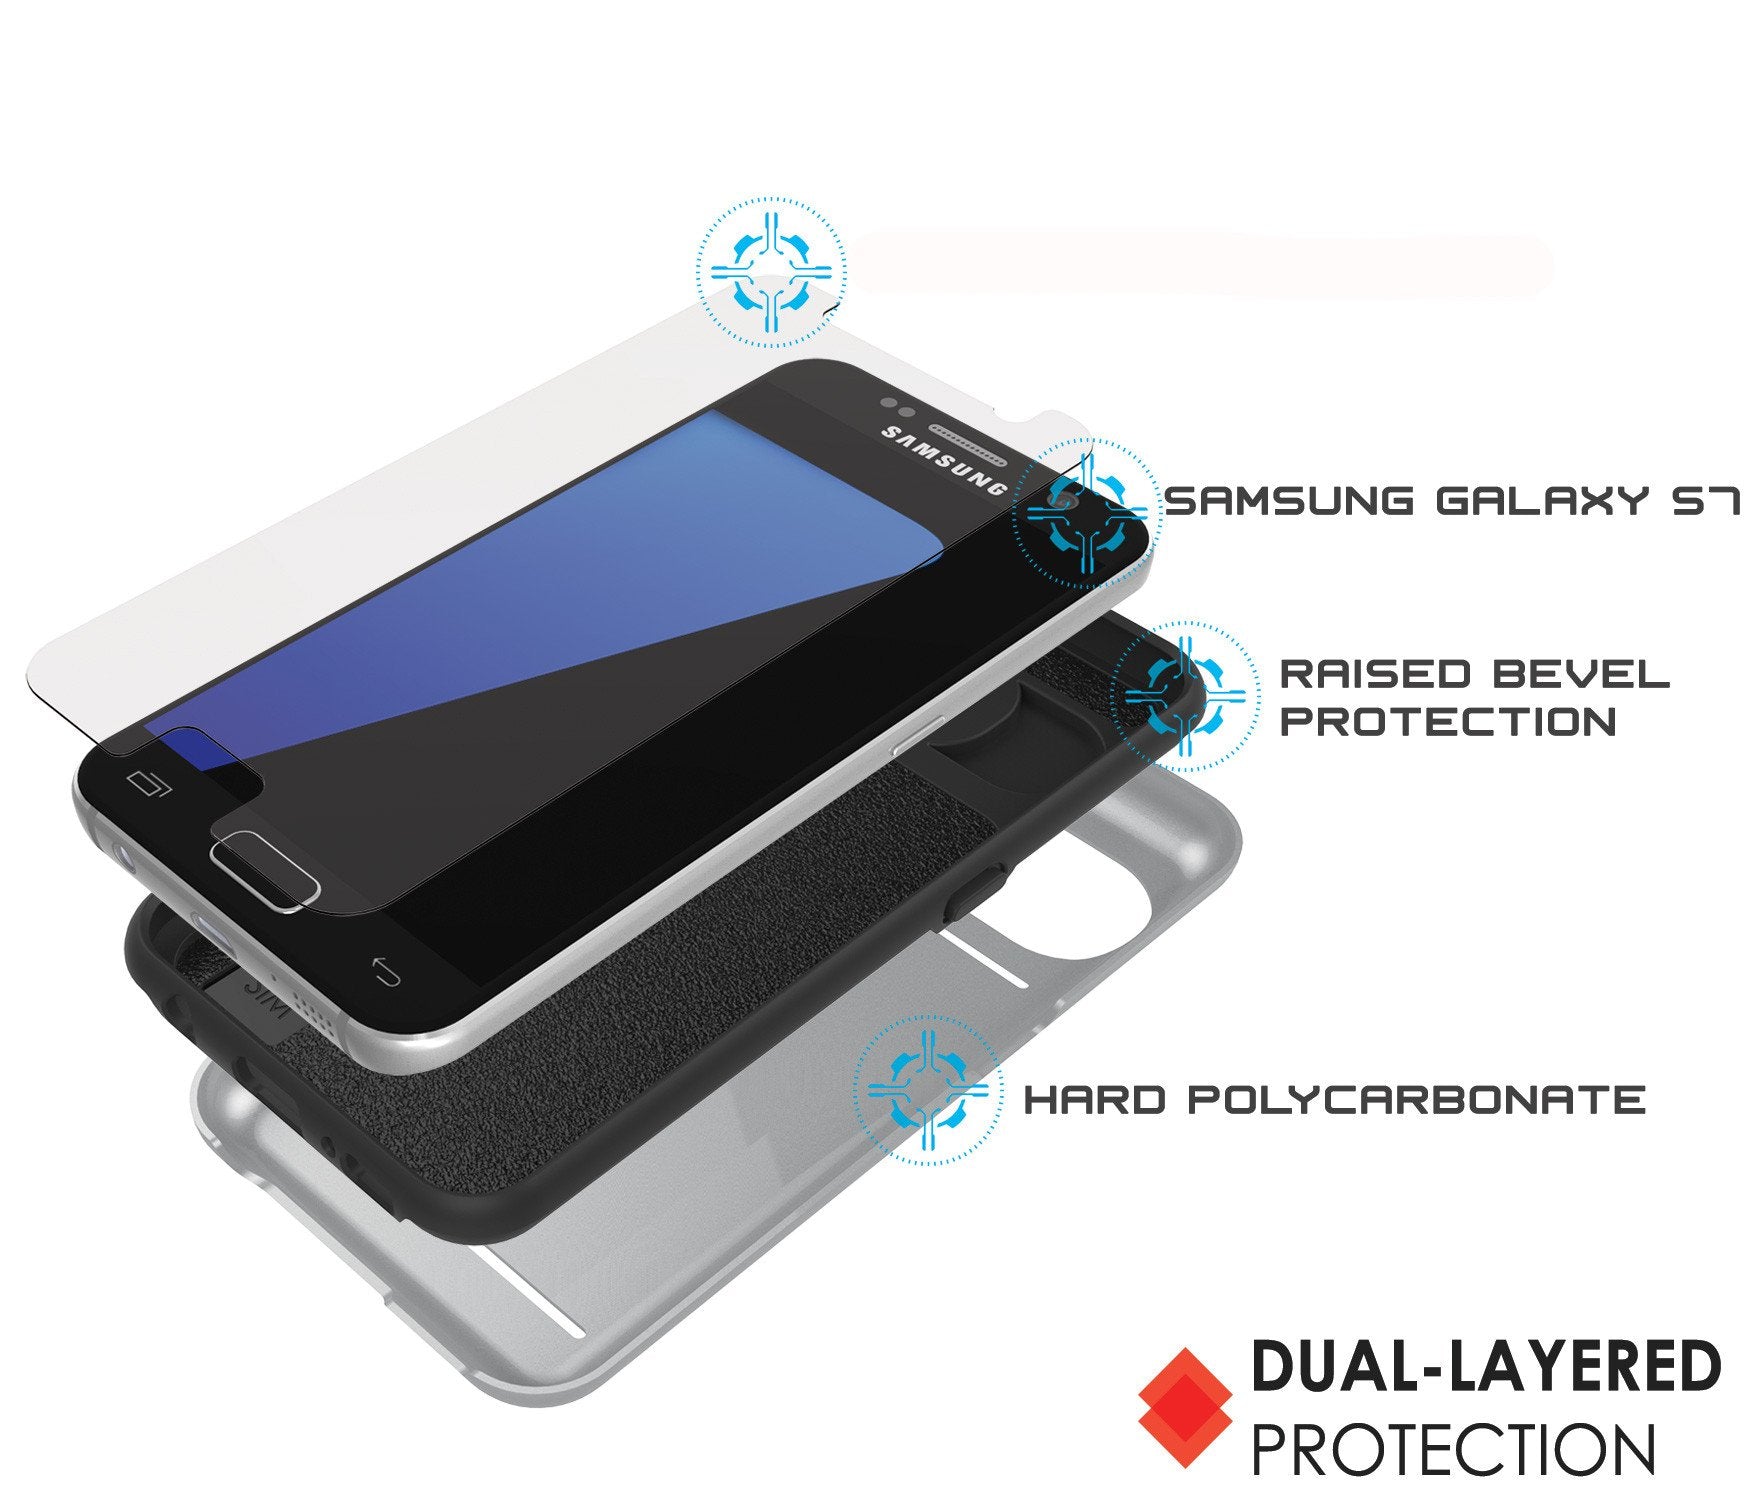 Galaxy S7 EDGE Case PunkCase CLUTCH Silver Series Slim Armor Soft Cover Case w/ Screen Protector